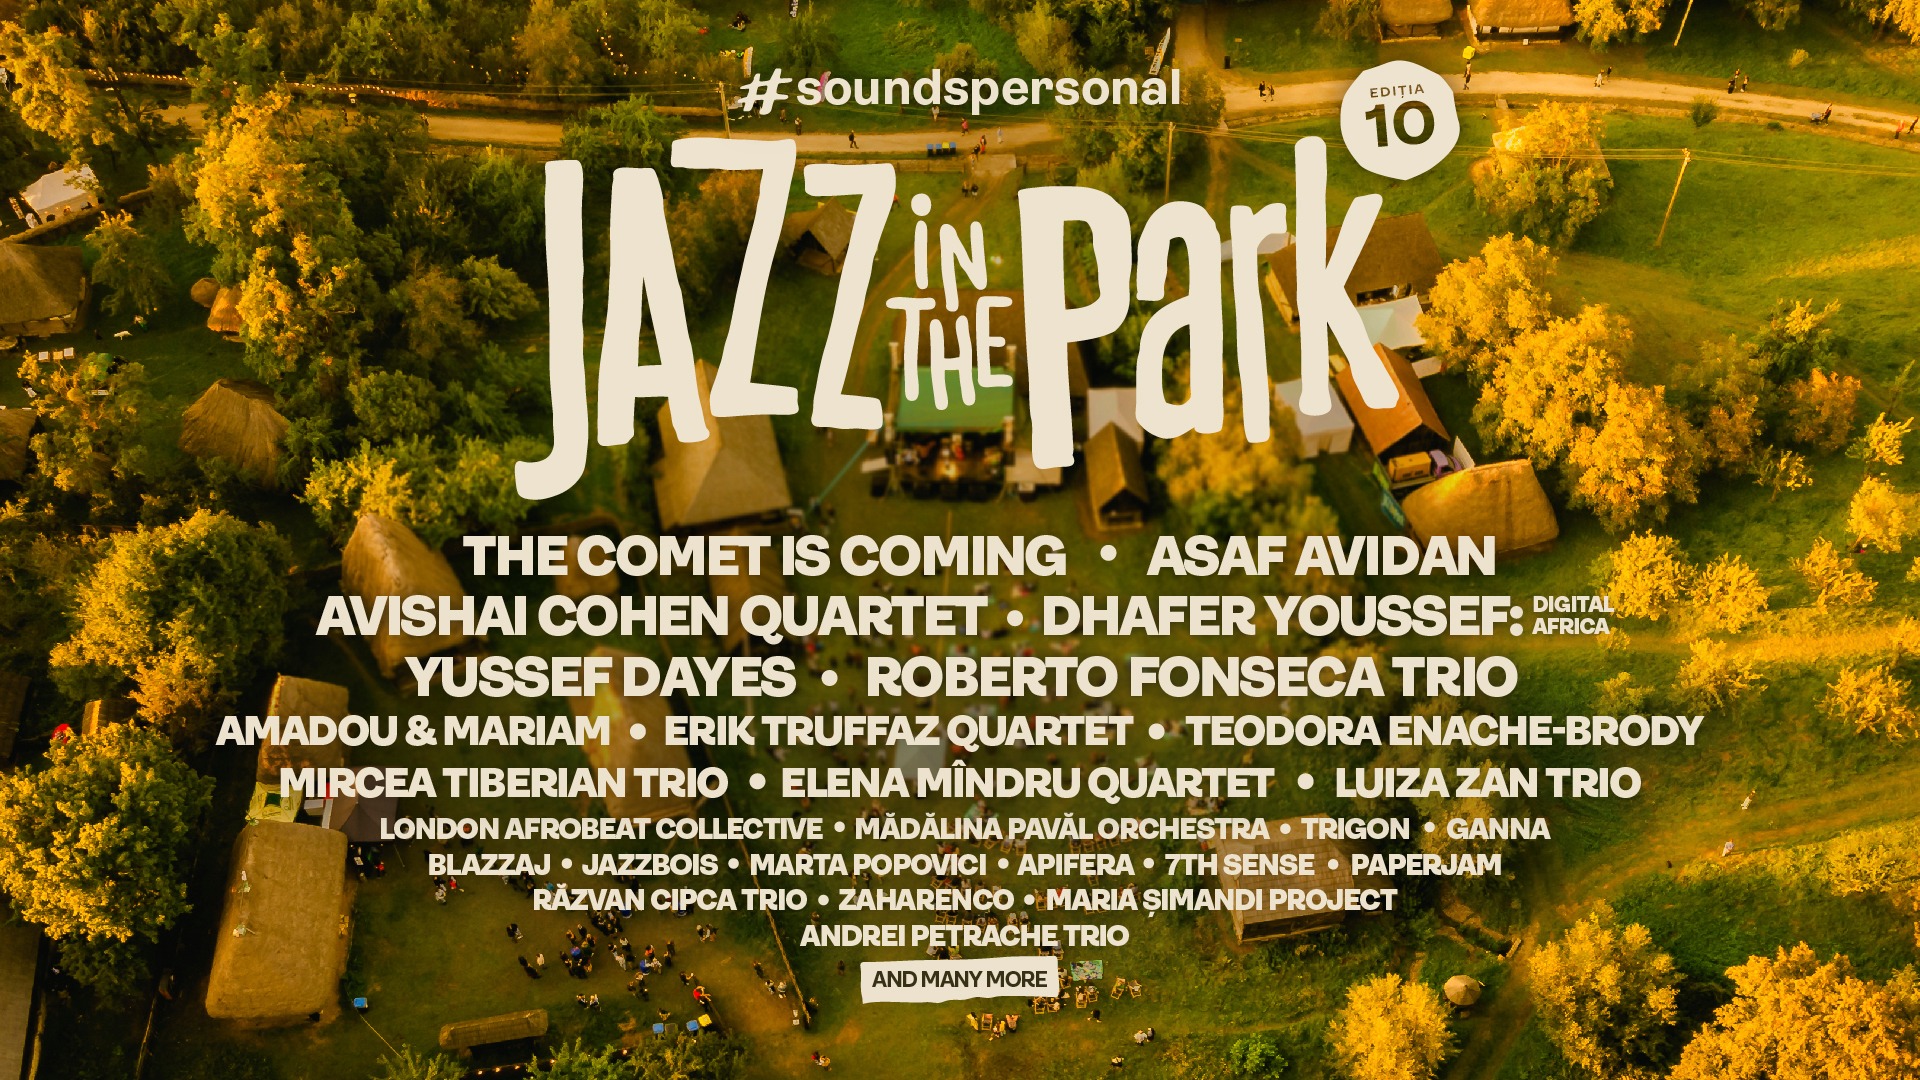 Jazz in the Park 2022 - Cluj-Napoca